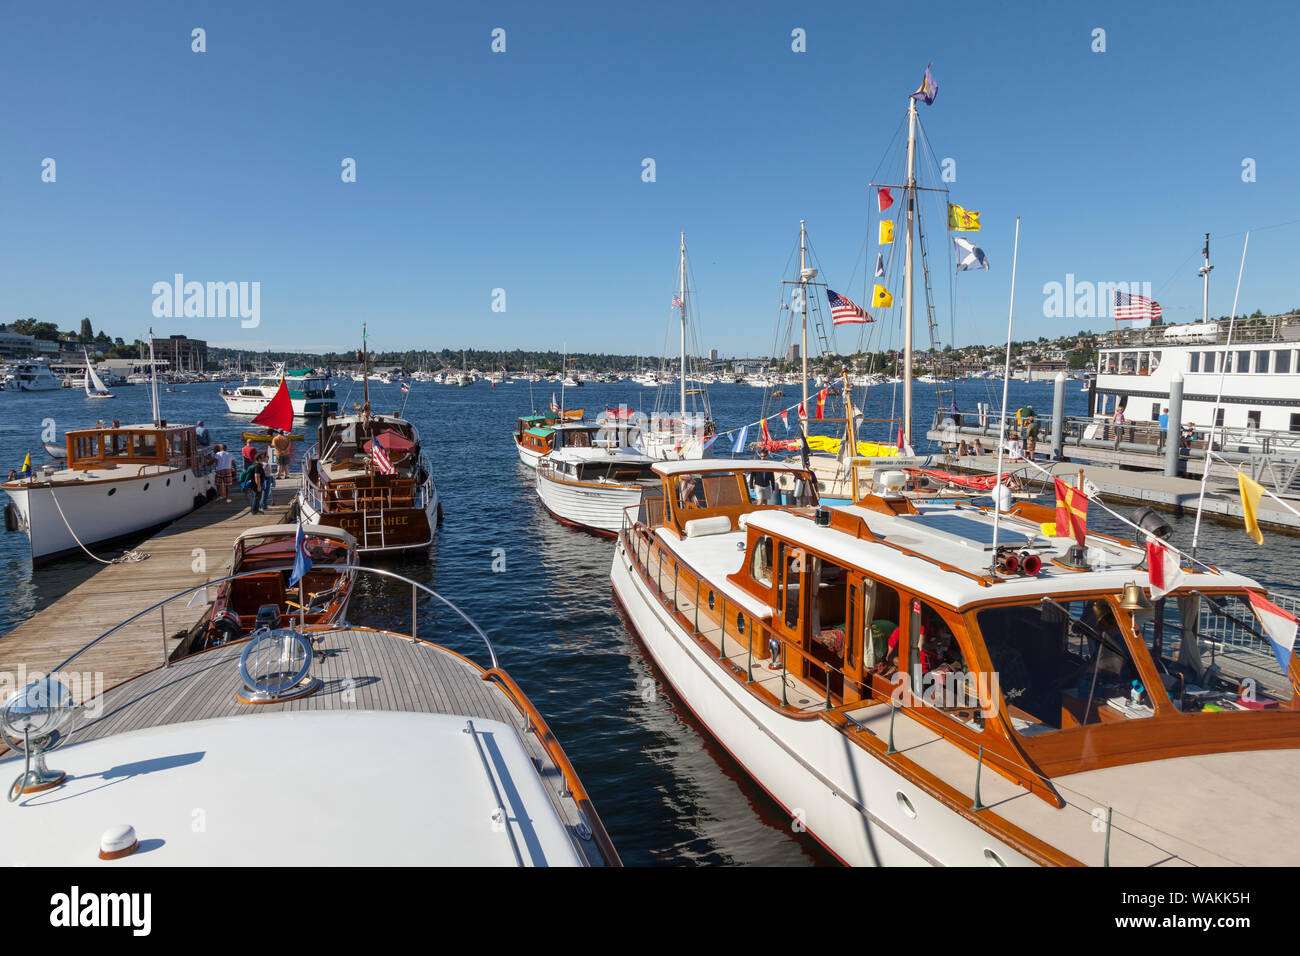 Wooden Boat Festival, July 4th Celebration. South Lake Union, Seattle, Washington State, USA Stock Photo